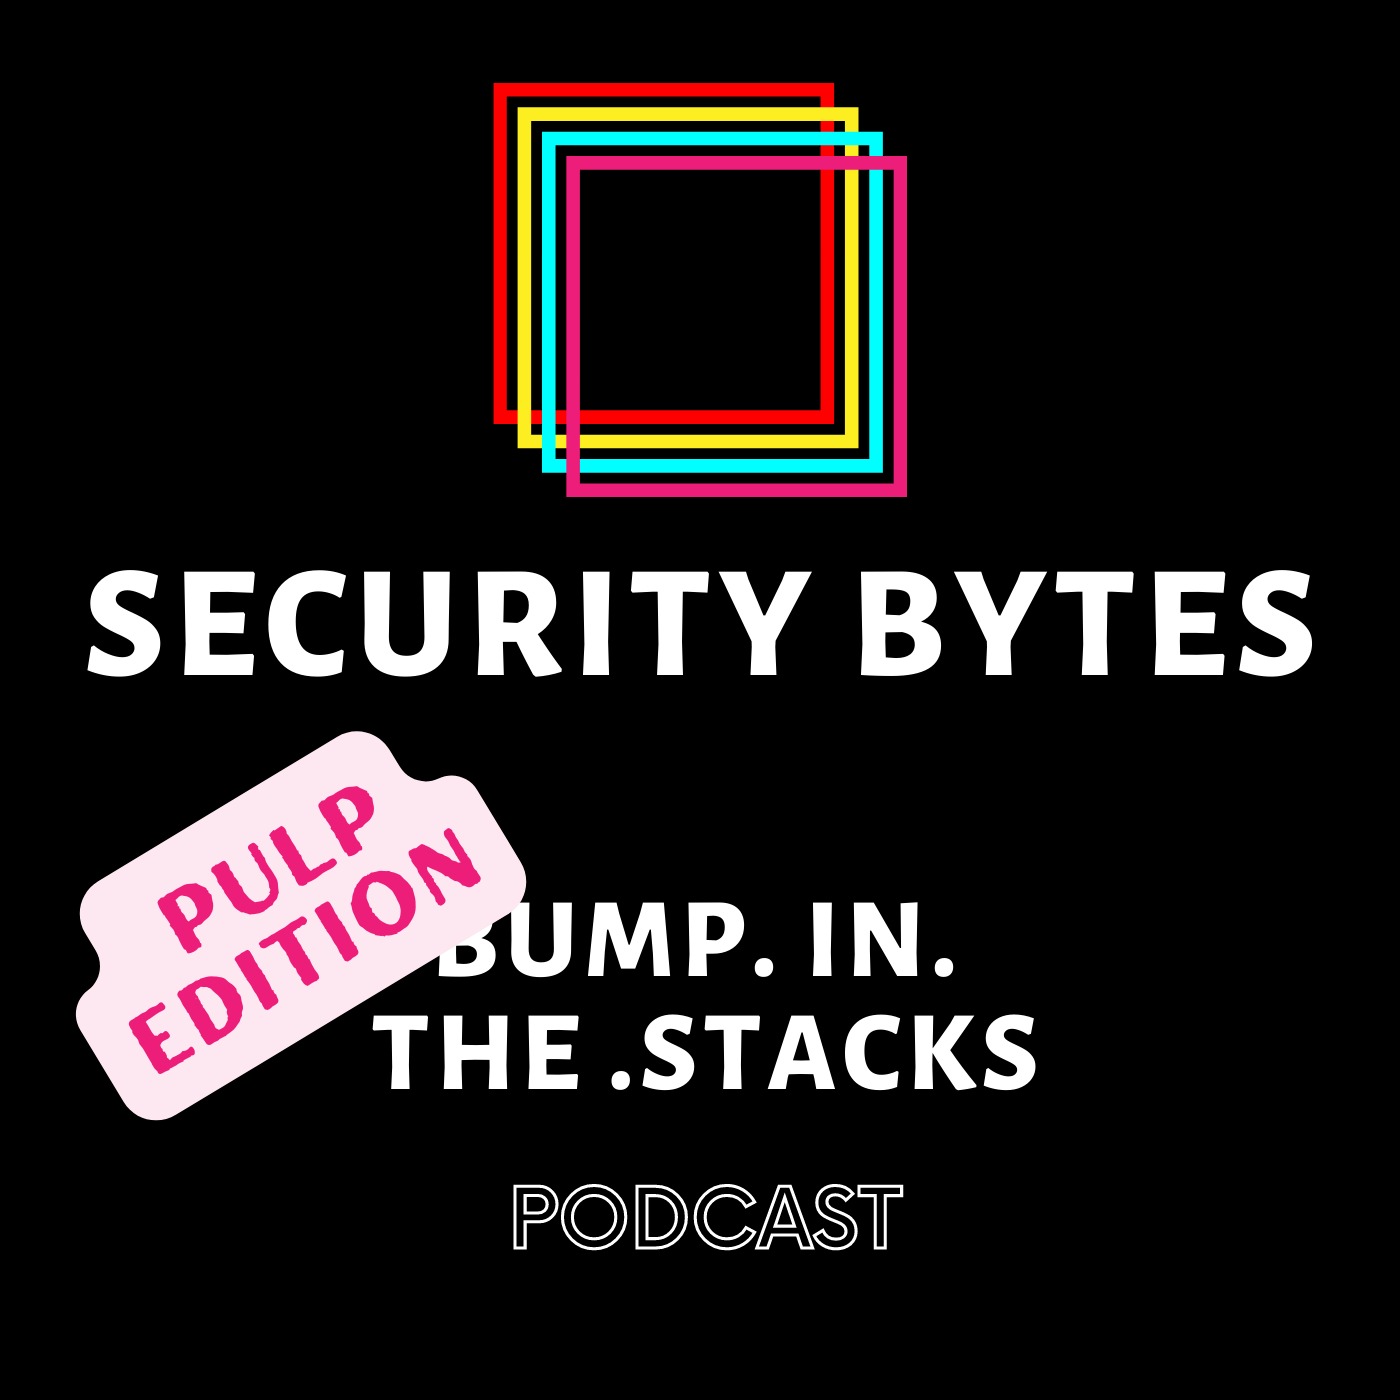 Trailer - Introducing Security Bytes